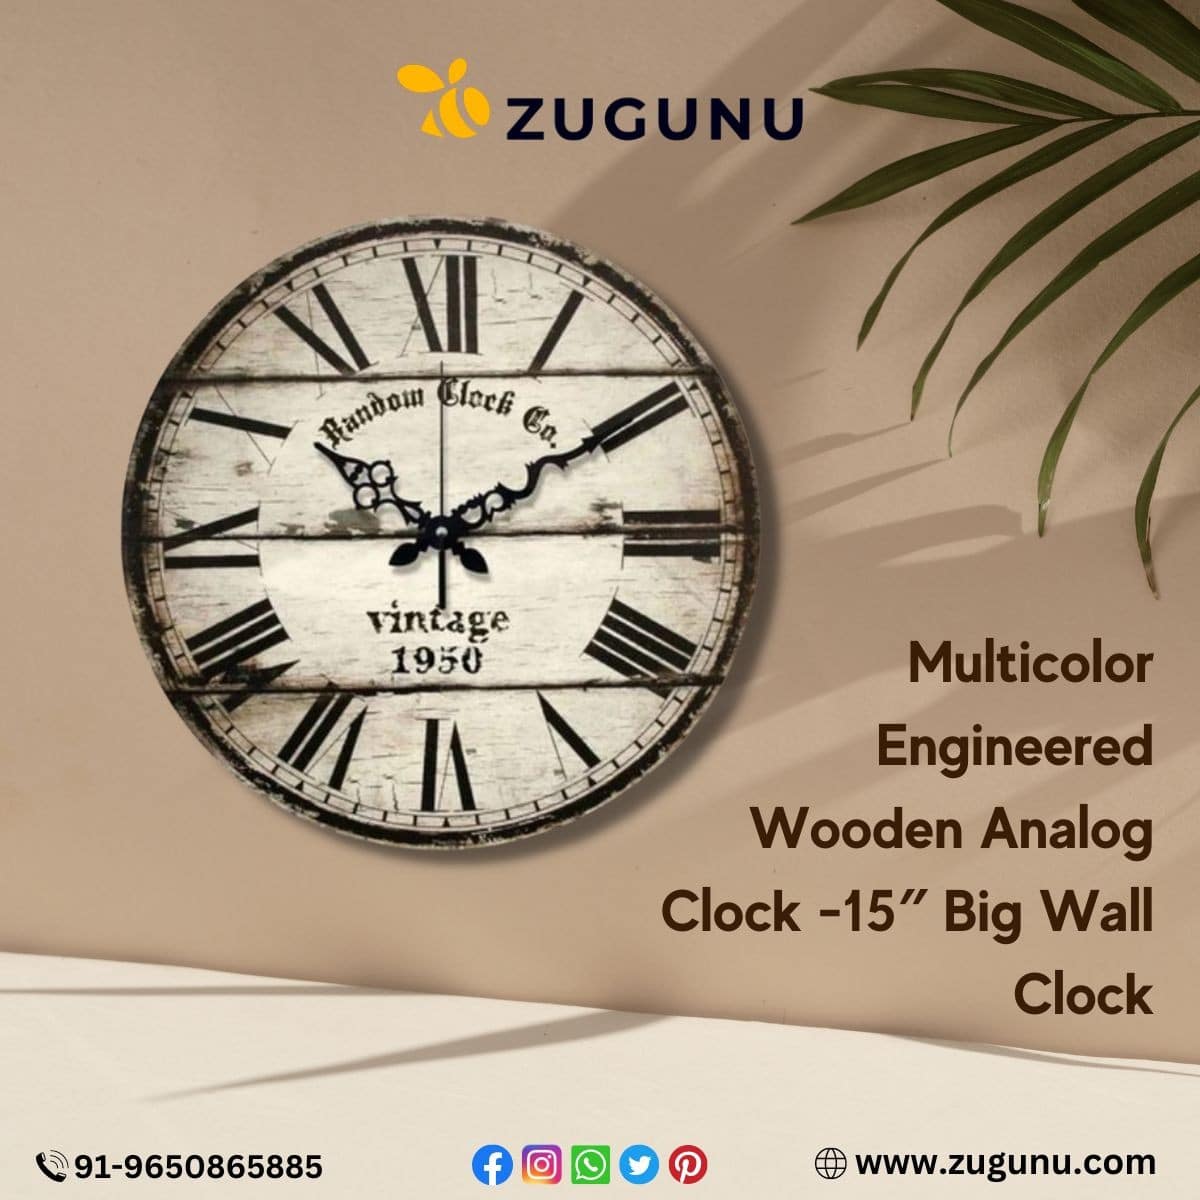 Multicoloured Engineered Wooden Analog Wall Clock Zugunu